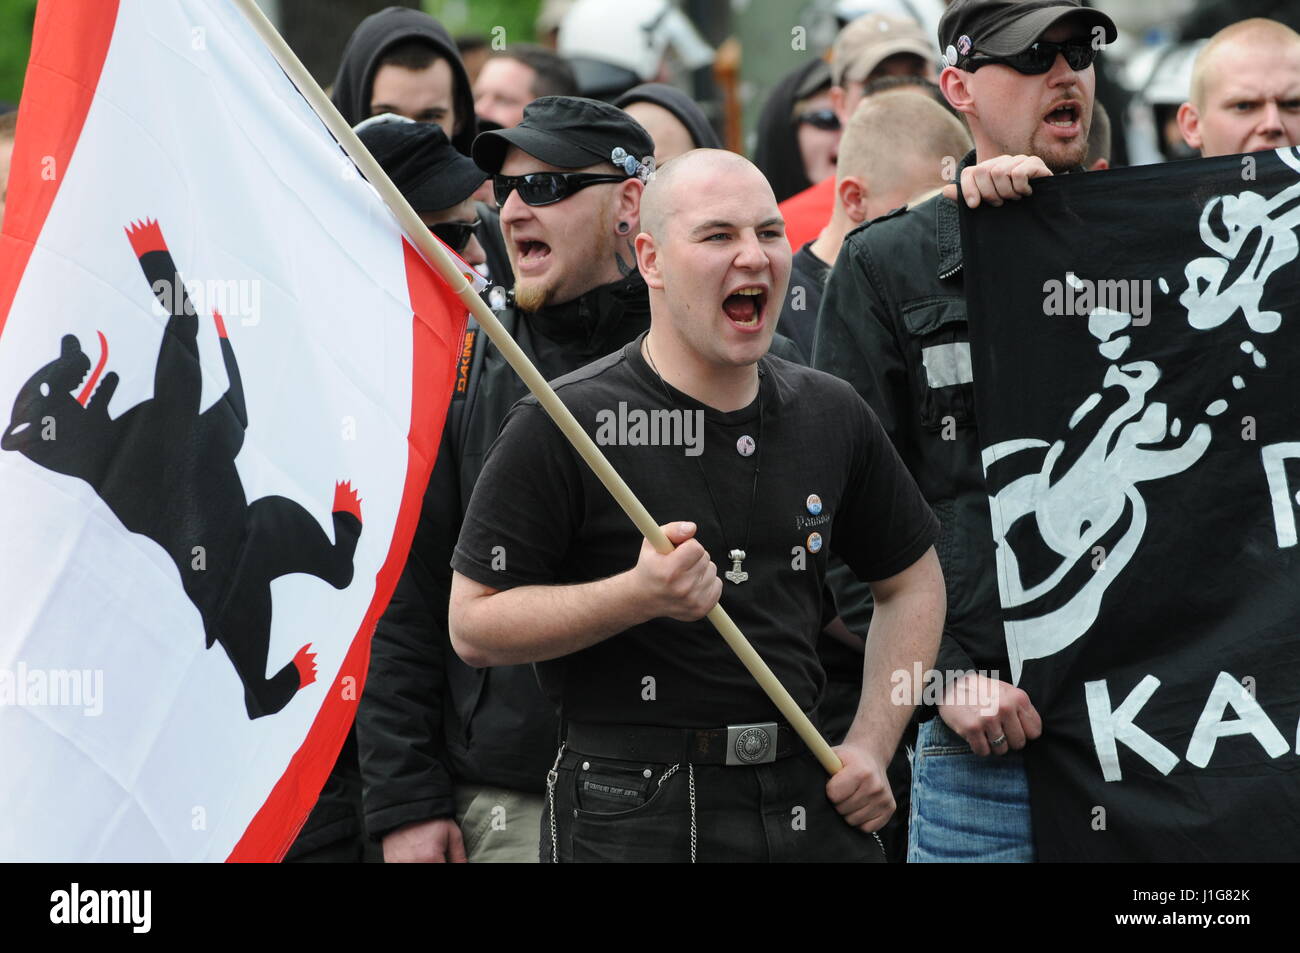 neonazis-en-marzo-berlin-prenzlauerberg-a-celebrar-el-primero-de-mayo-j1g82k.jpg